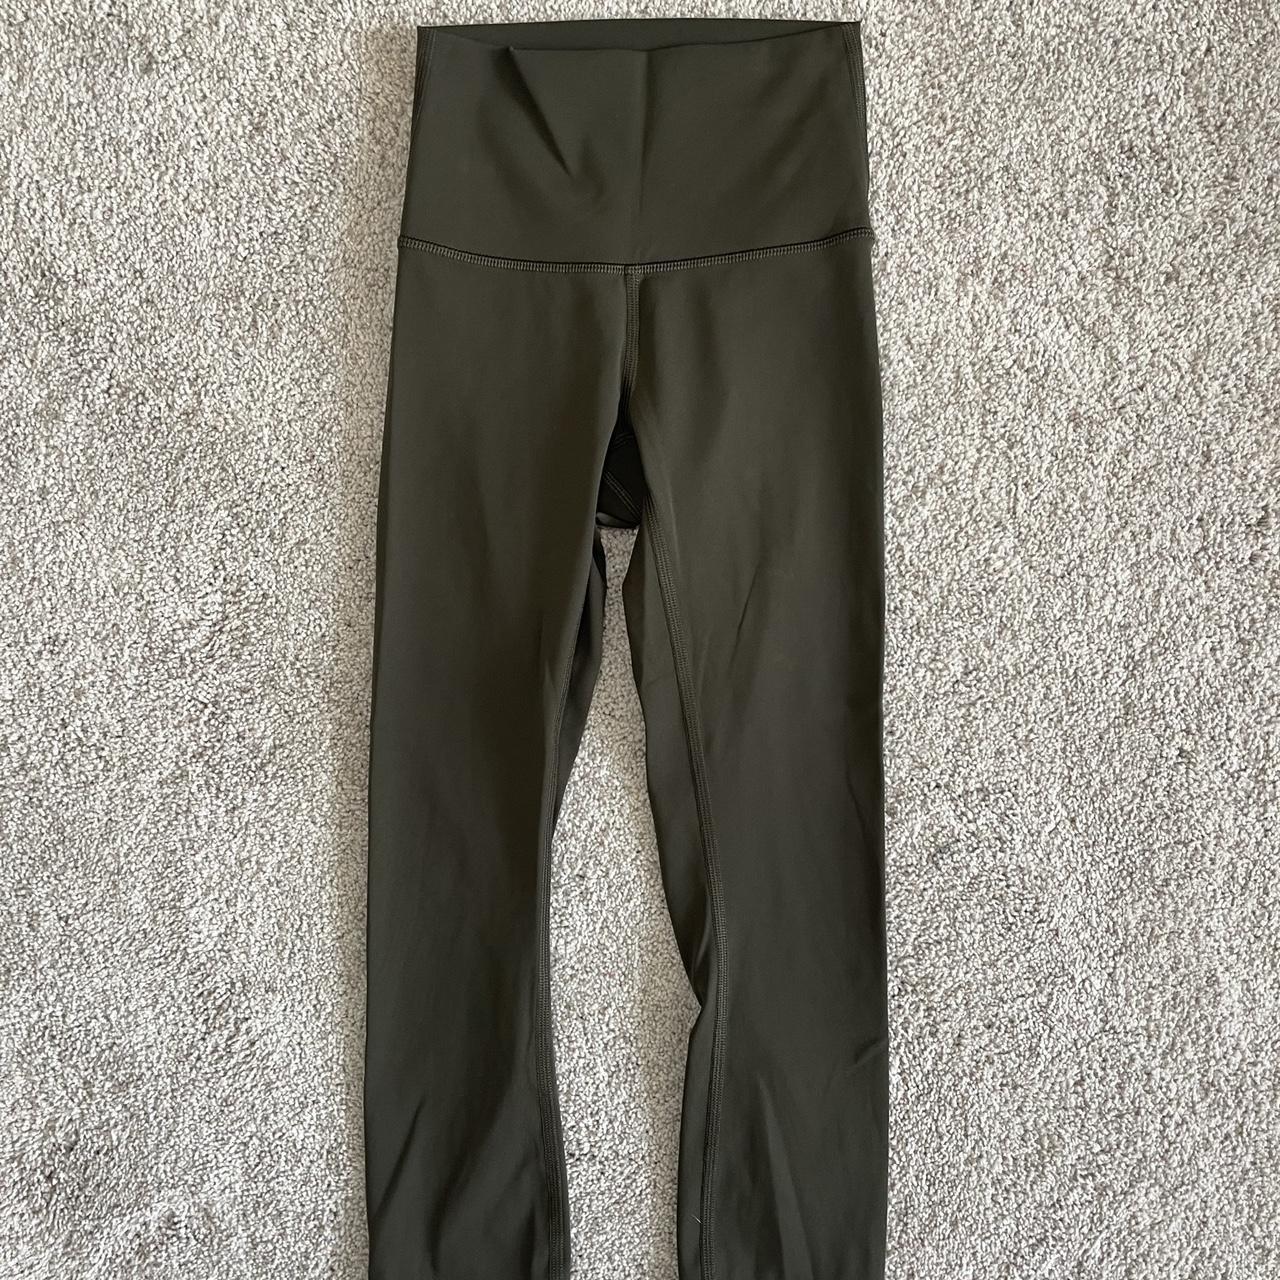 Lululemon dark green capri leggings (the tag ripped